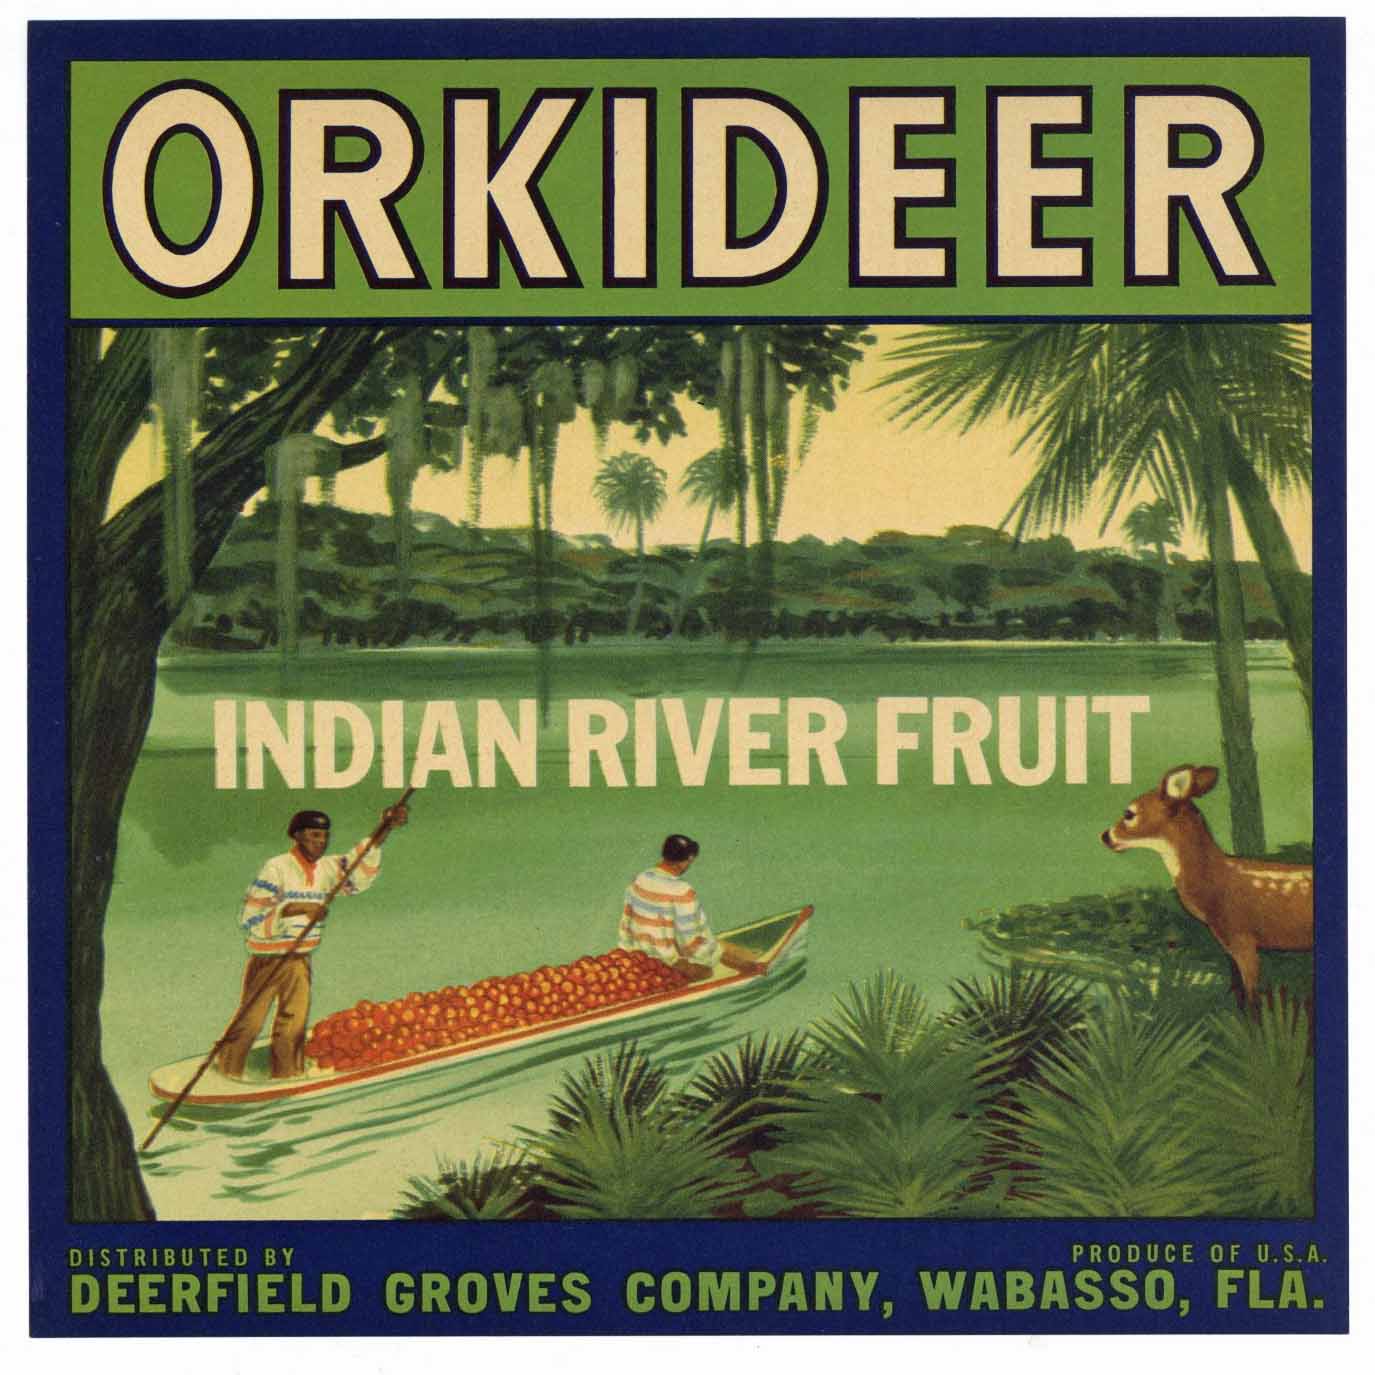 Orkideer Brand Vintage Wabasso Florida Citrus Crate Label